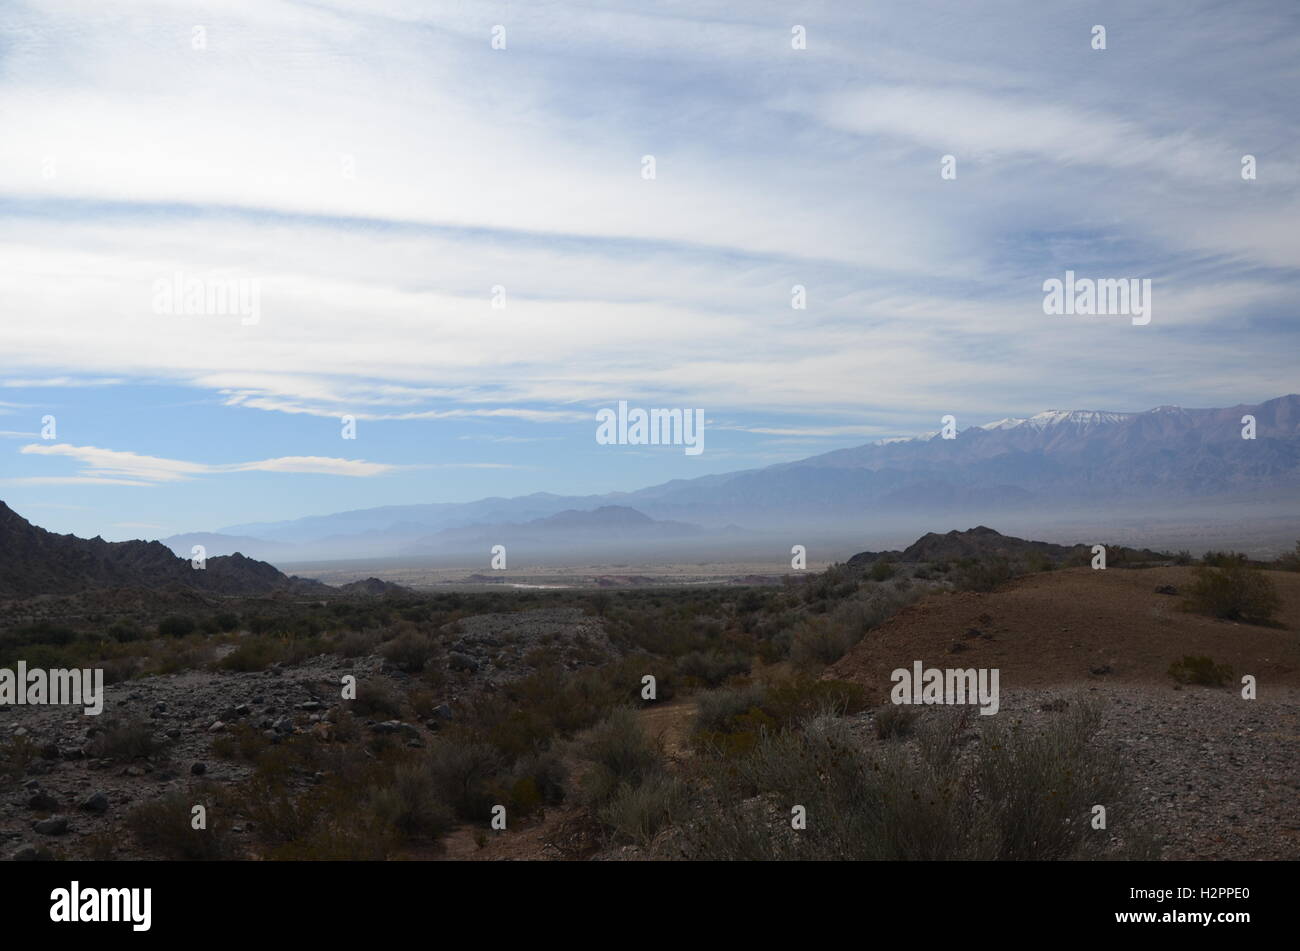 Foggy mountains in Argentina desert Stock Photo